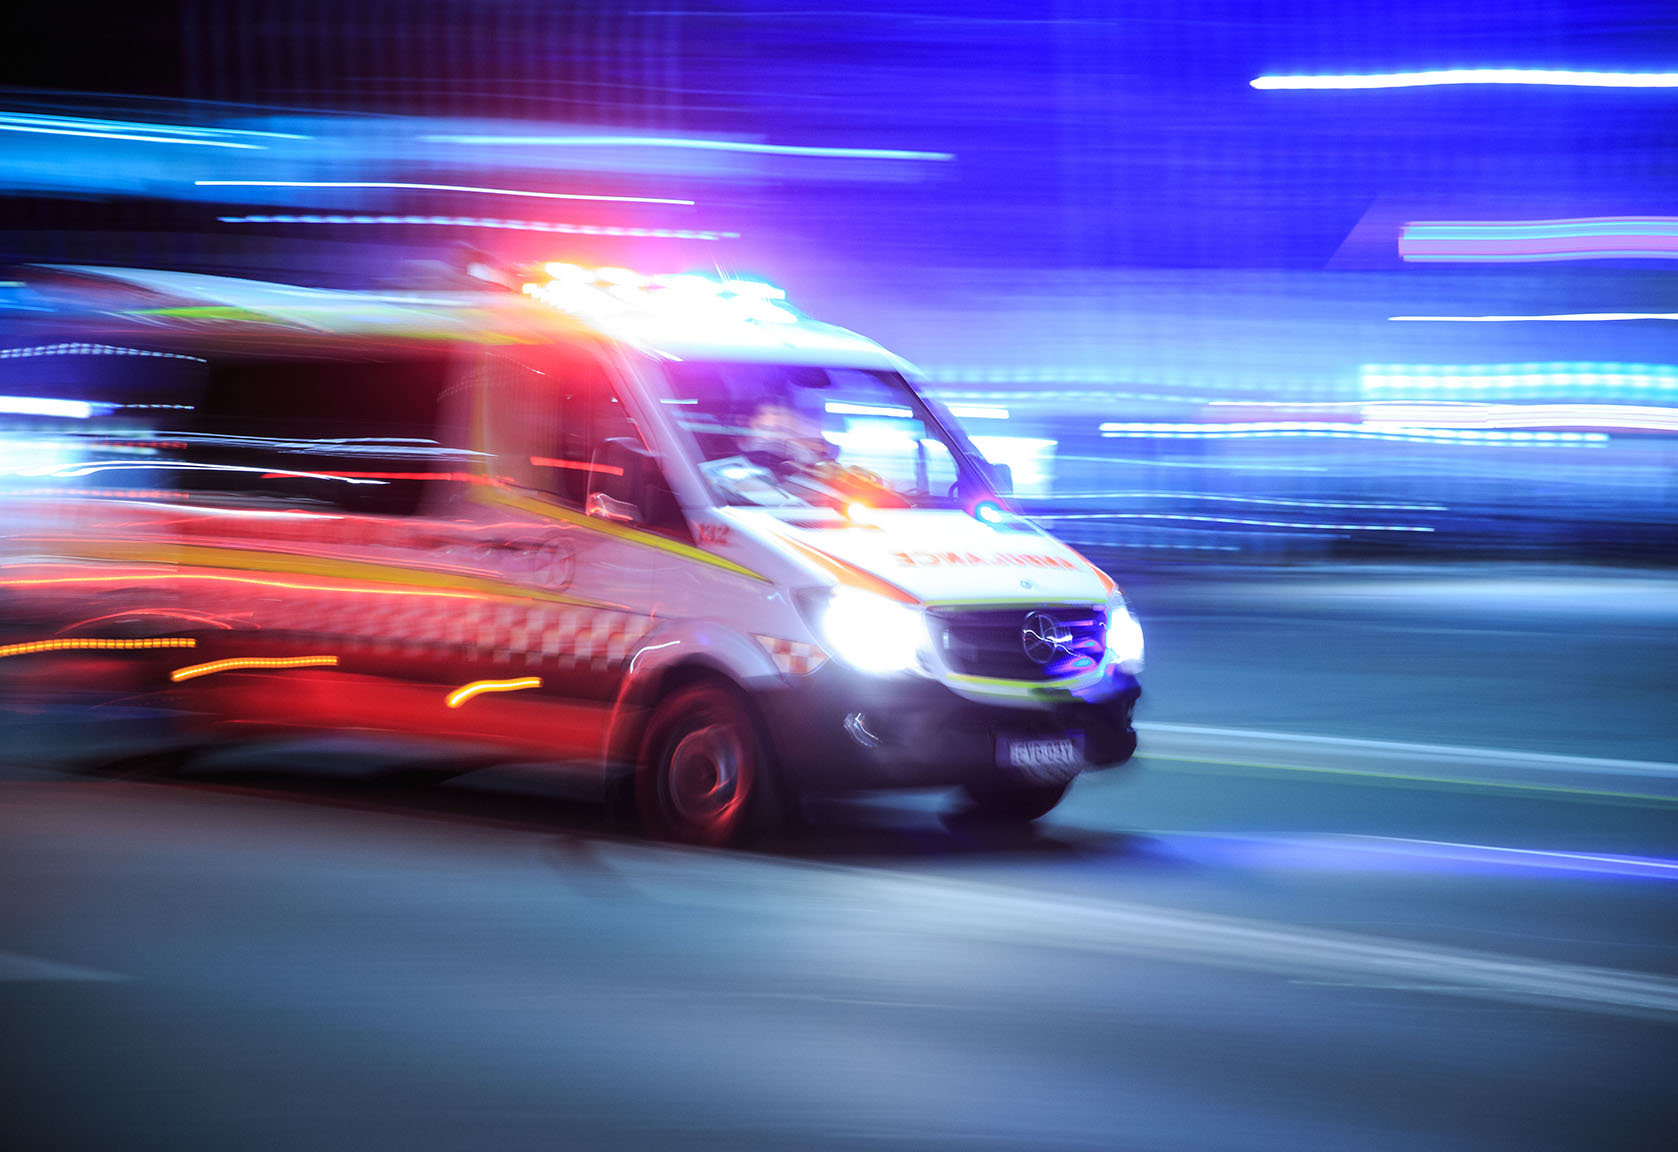 https://www.ambulance.nsw.gov.au/__data/assets/image/0006/552264/Calling-an-Ambulance.jpg